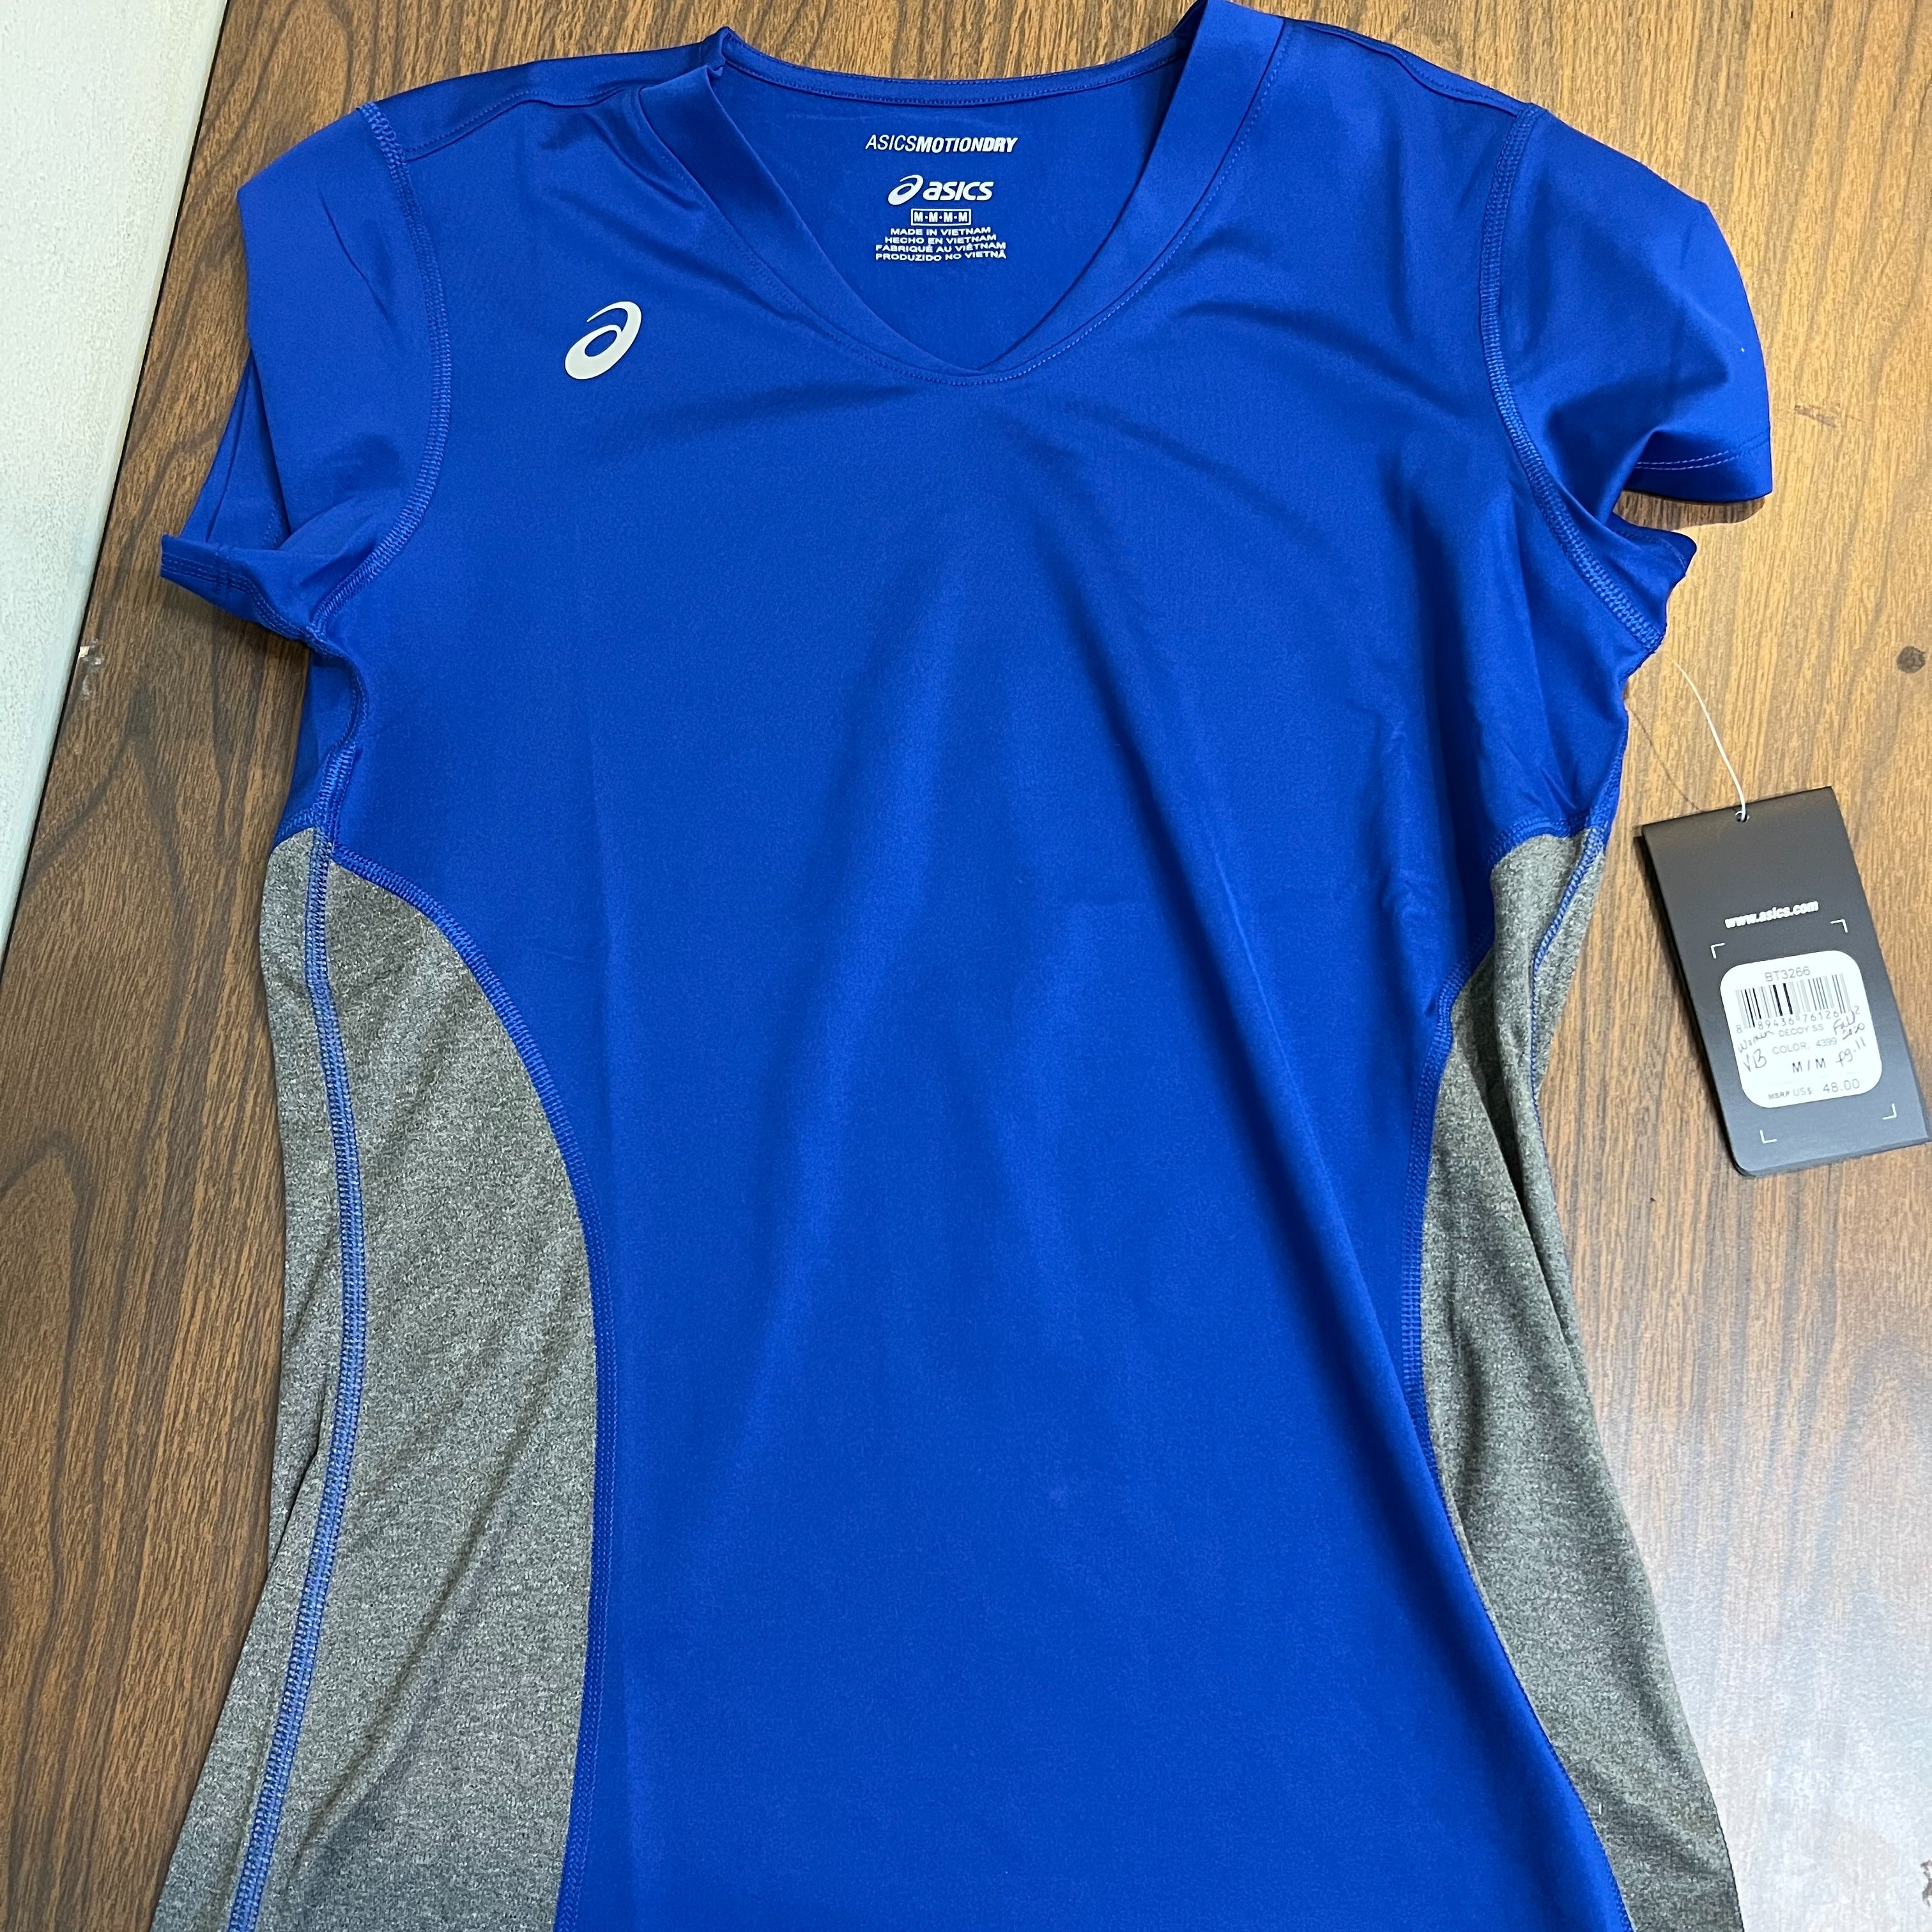 BNWT St. Louis Blues Womens Ladies Lack Up Jersey Shirt (M,L) Medium Large